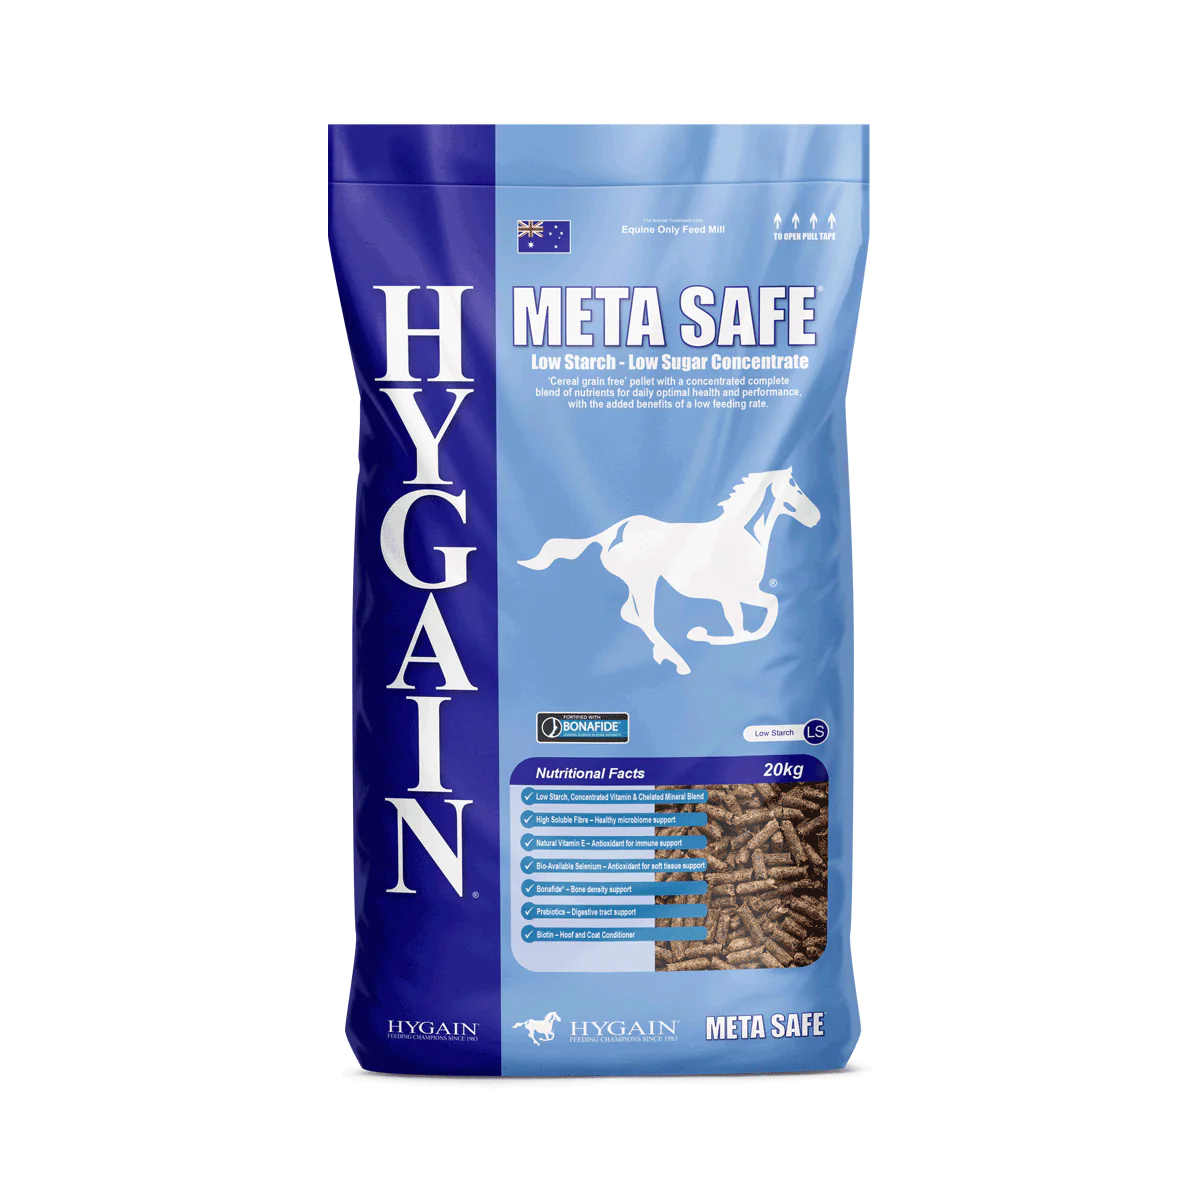 Hygain Meta Safe